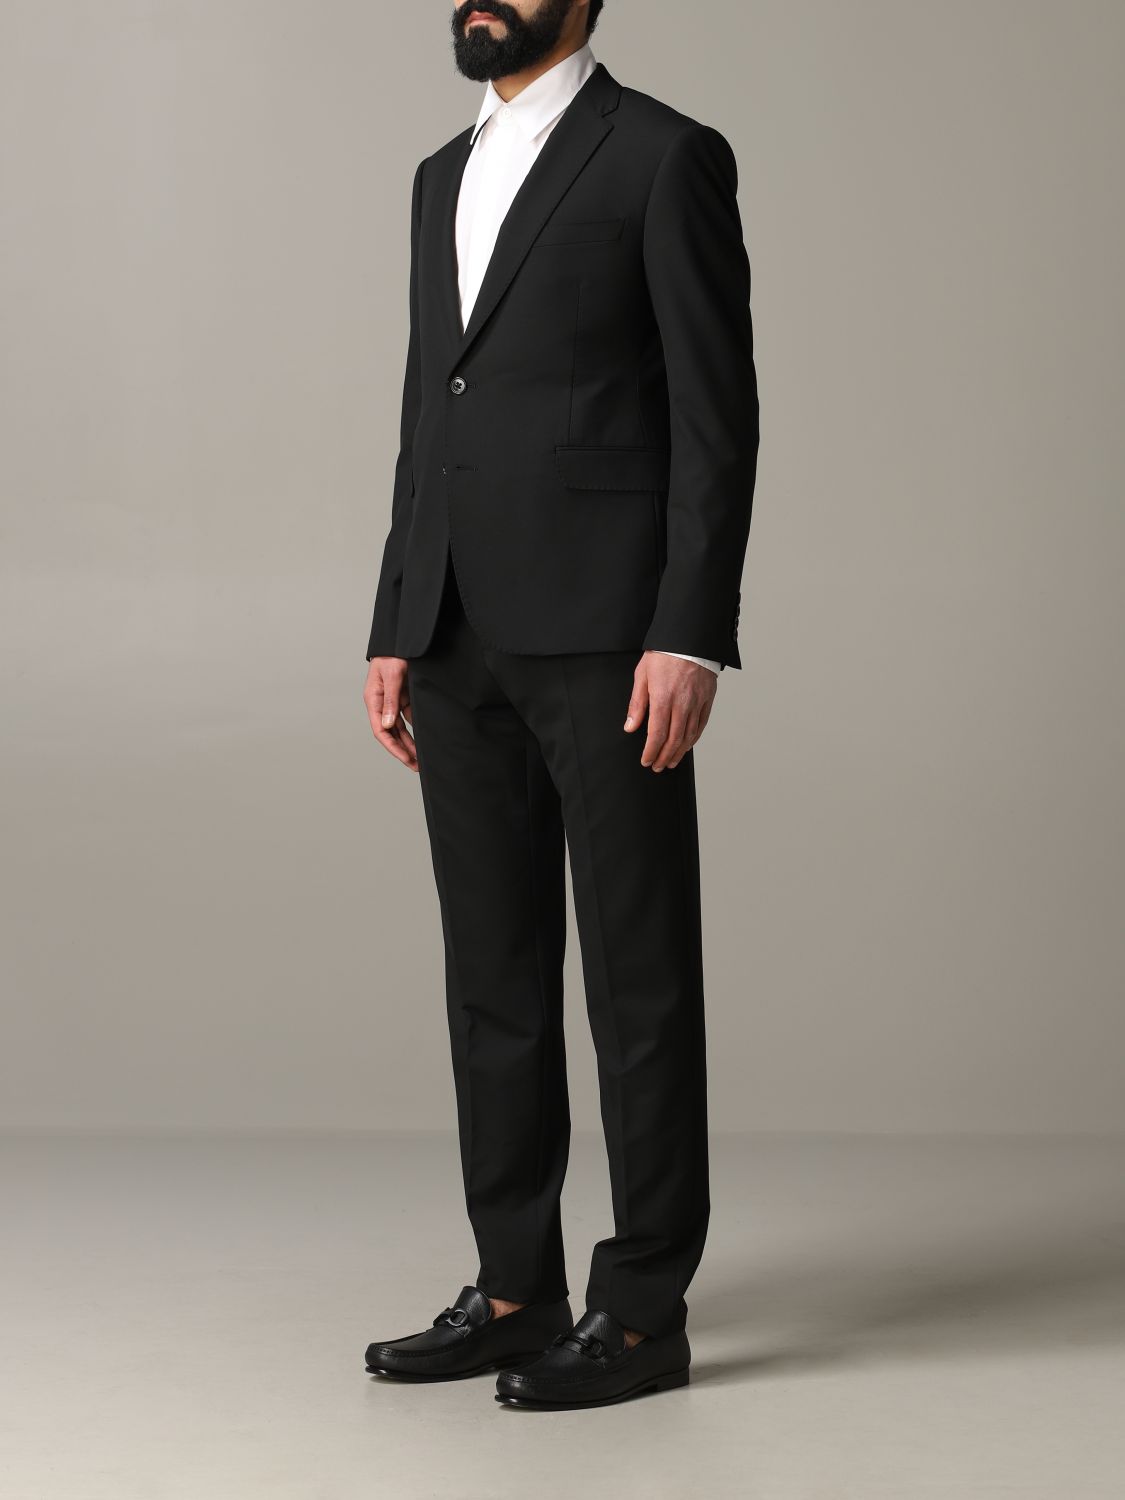 Emporio Armani Outlet: single-breasted 2-button suit - Black | Emporio ...